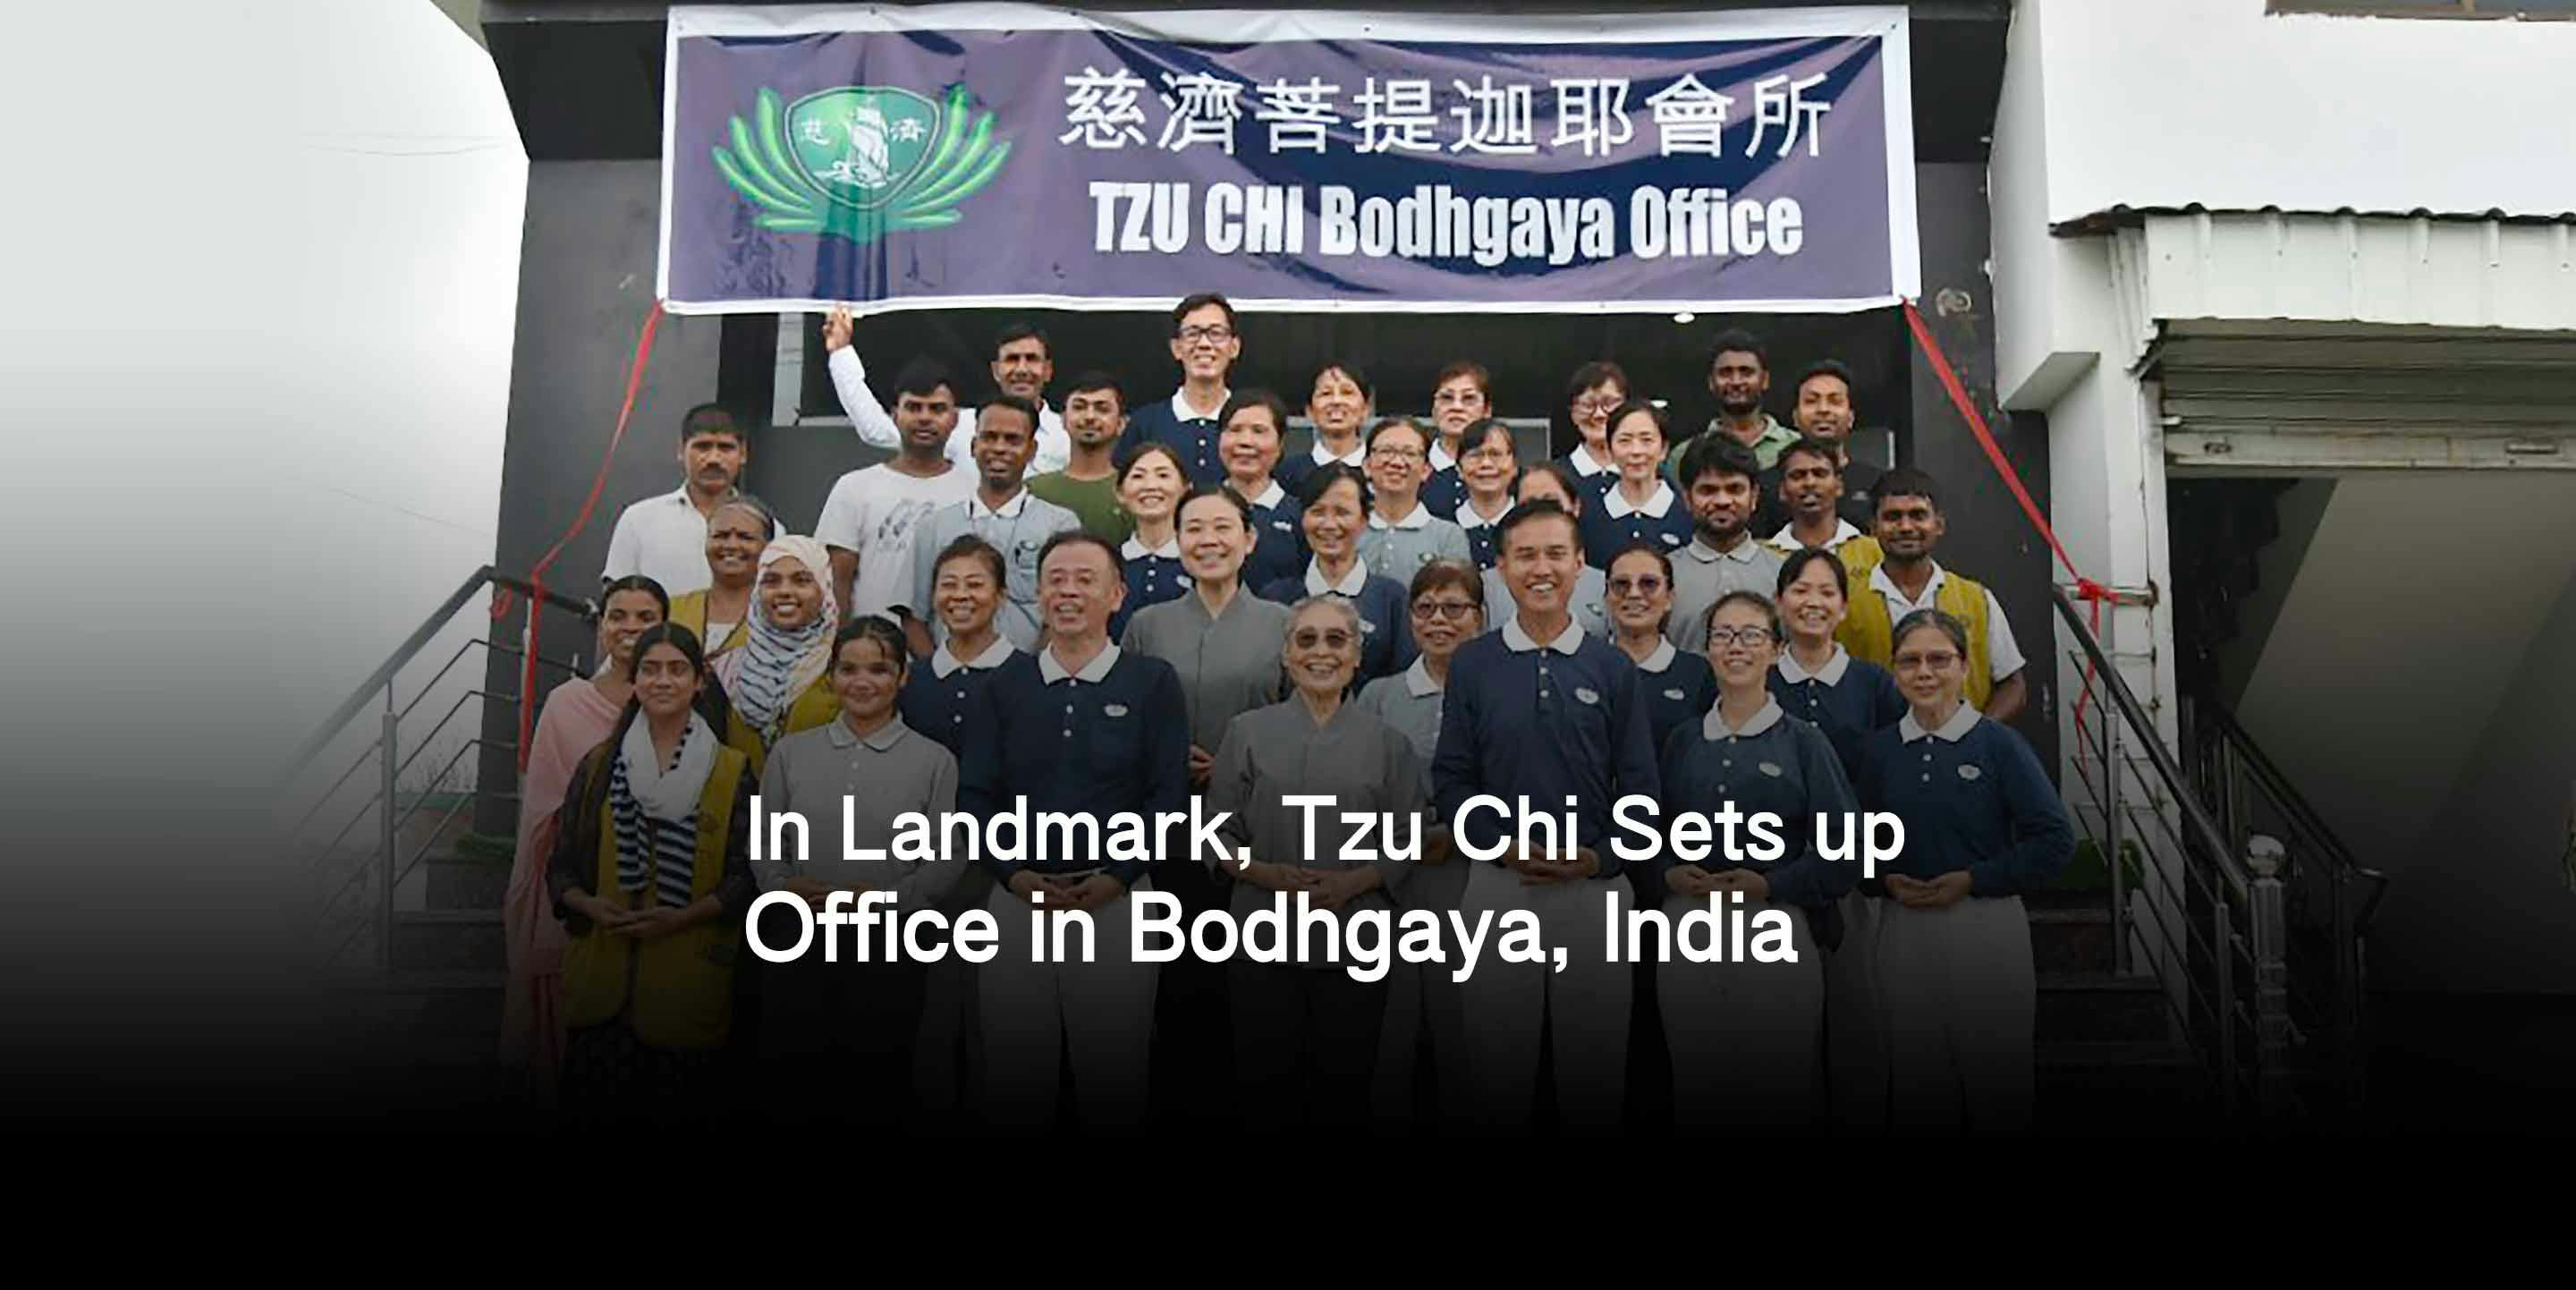 In Landmark, Tzu Chi Sets up Office in Bodhgaya, India